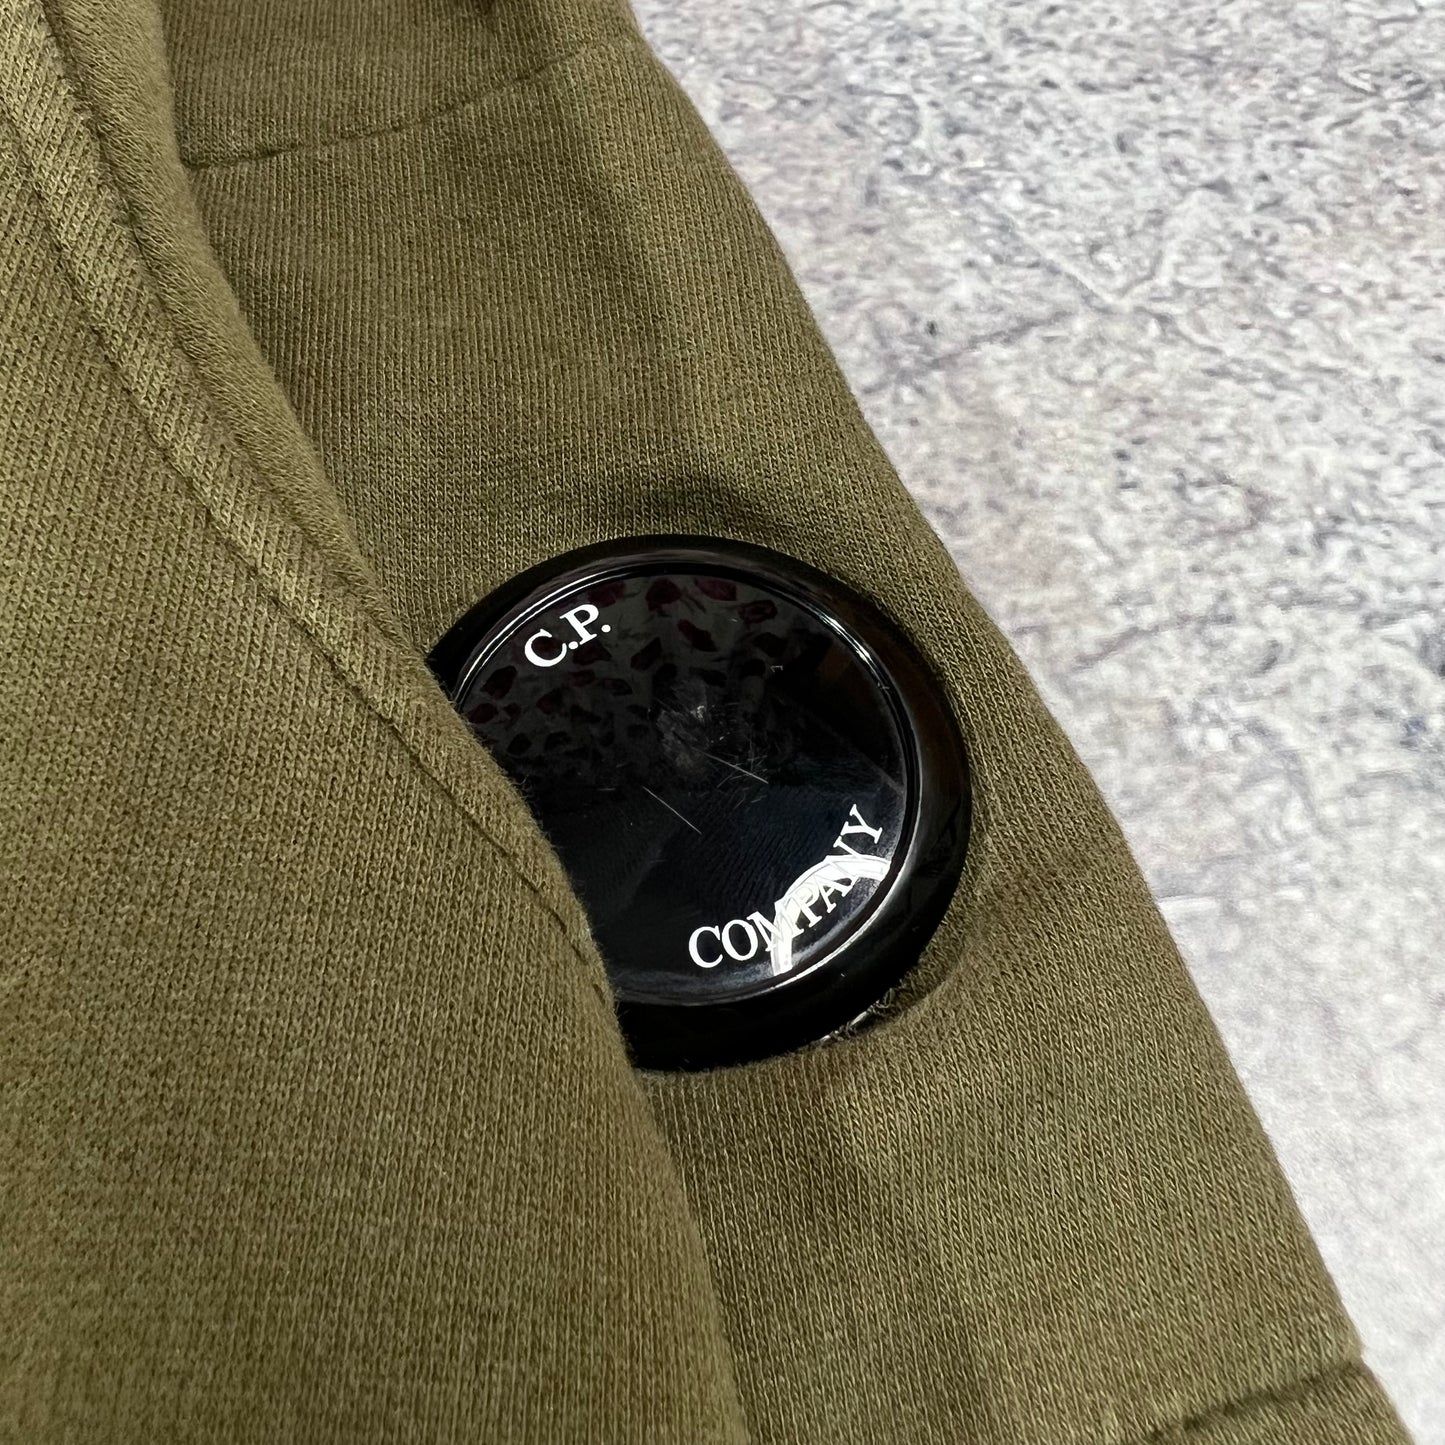 CP Company Quarter Zip Lens Sweatshirt Medium 22.5”